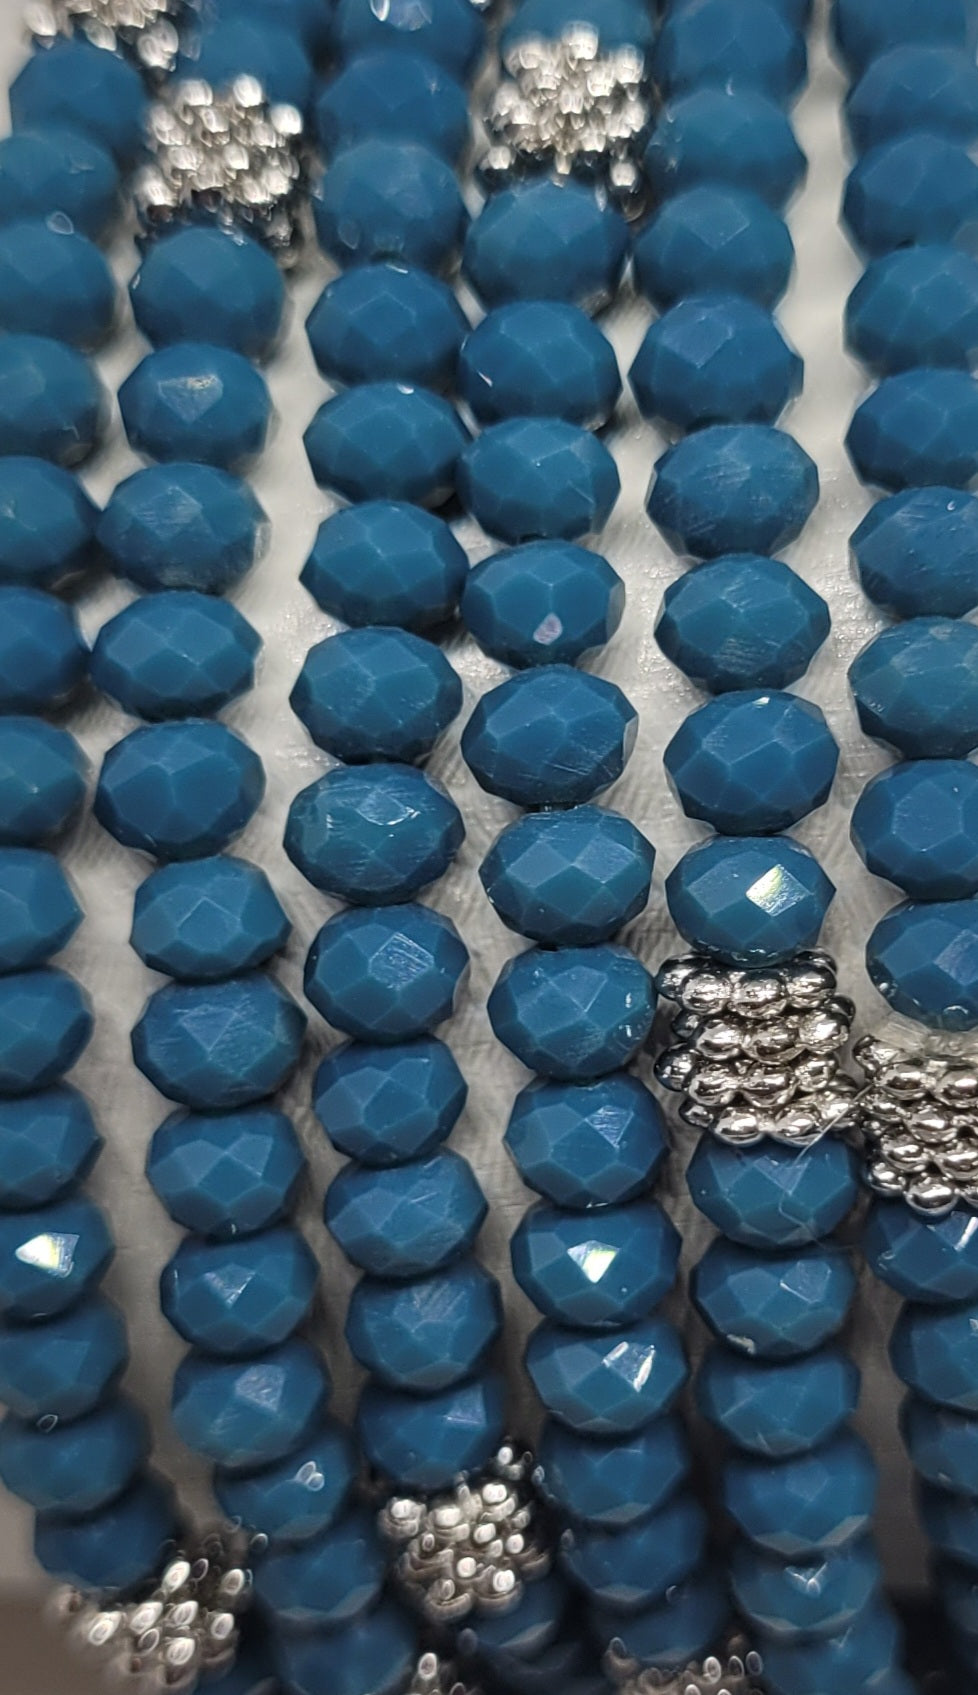 Stacking Stones Navy Blue Crystal Bracelet